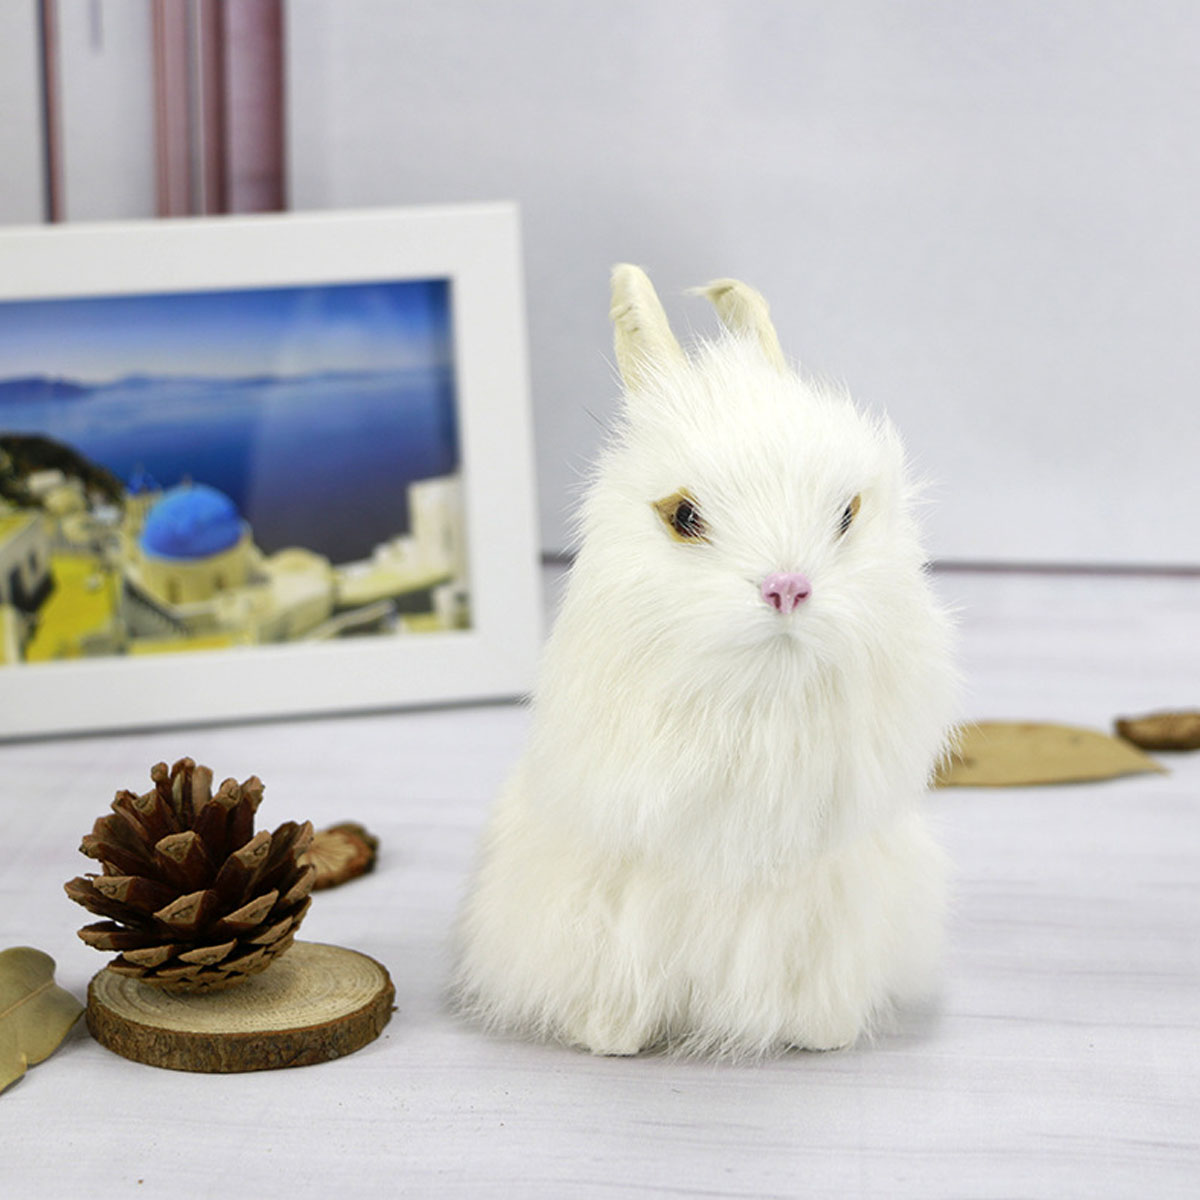 GrayYellowBrownWhite-Rabbits-Handmade-Easter-Bunnies-Home-Decorations-Desktop-Ornament-1452976-8